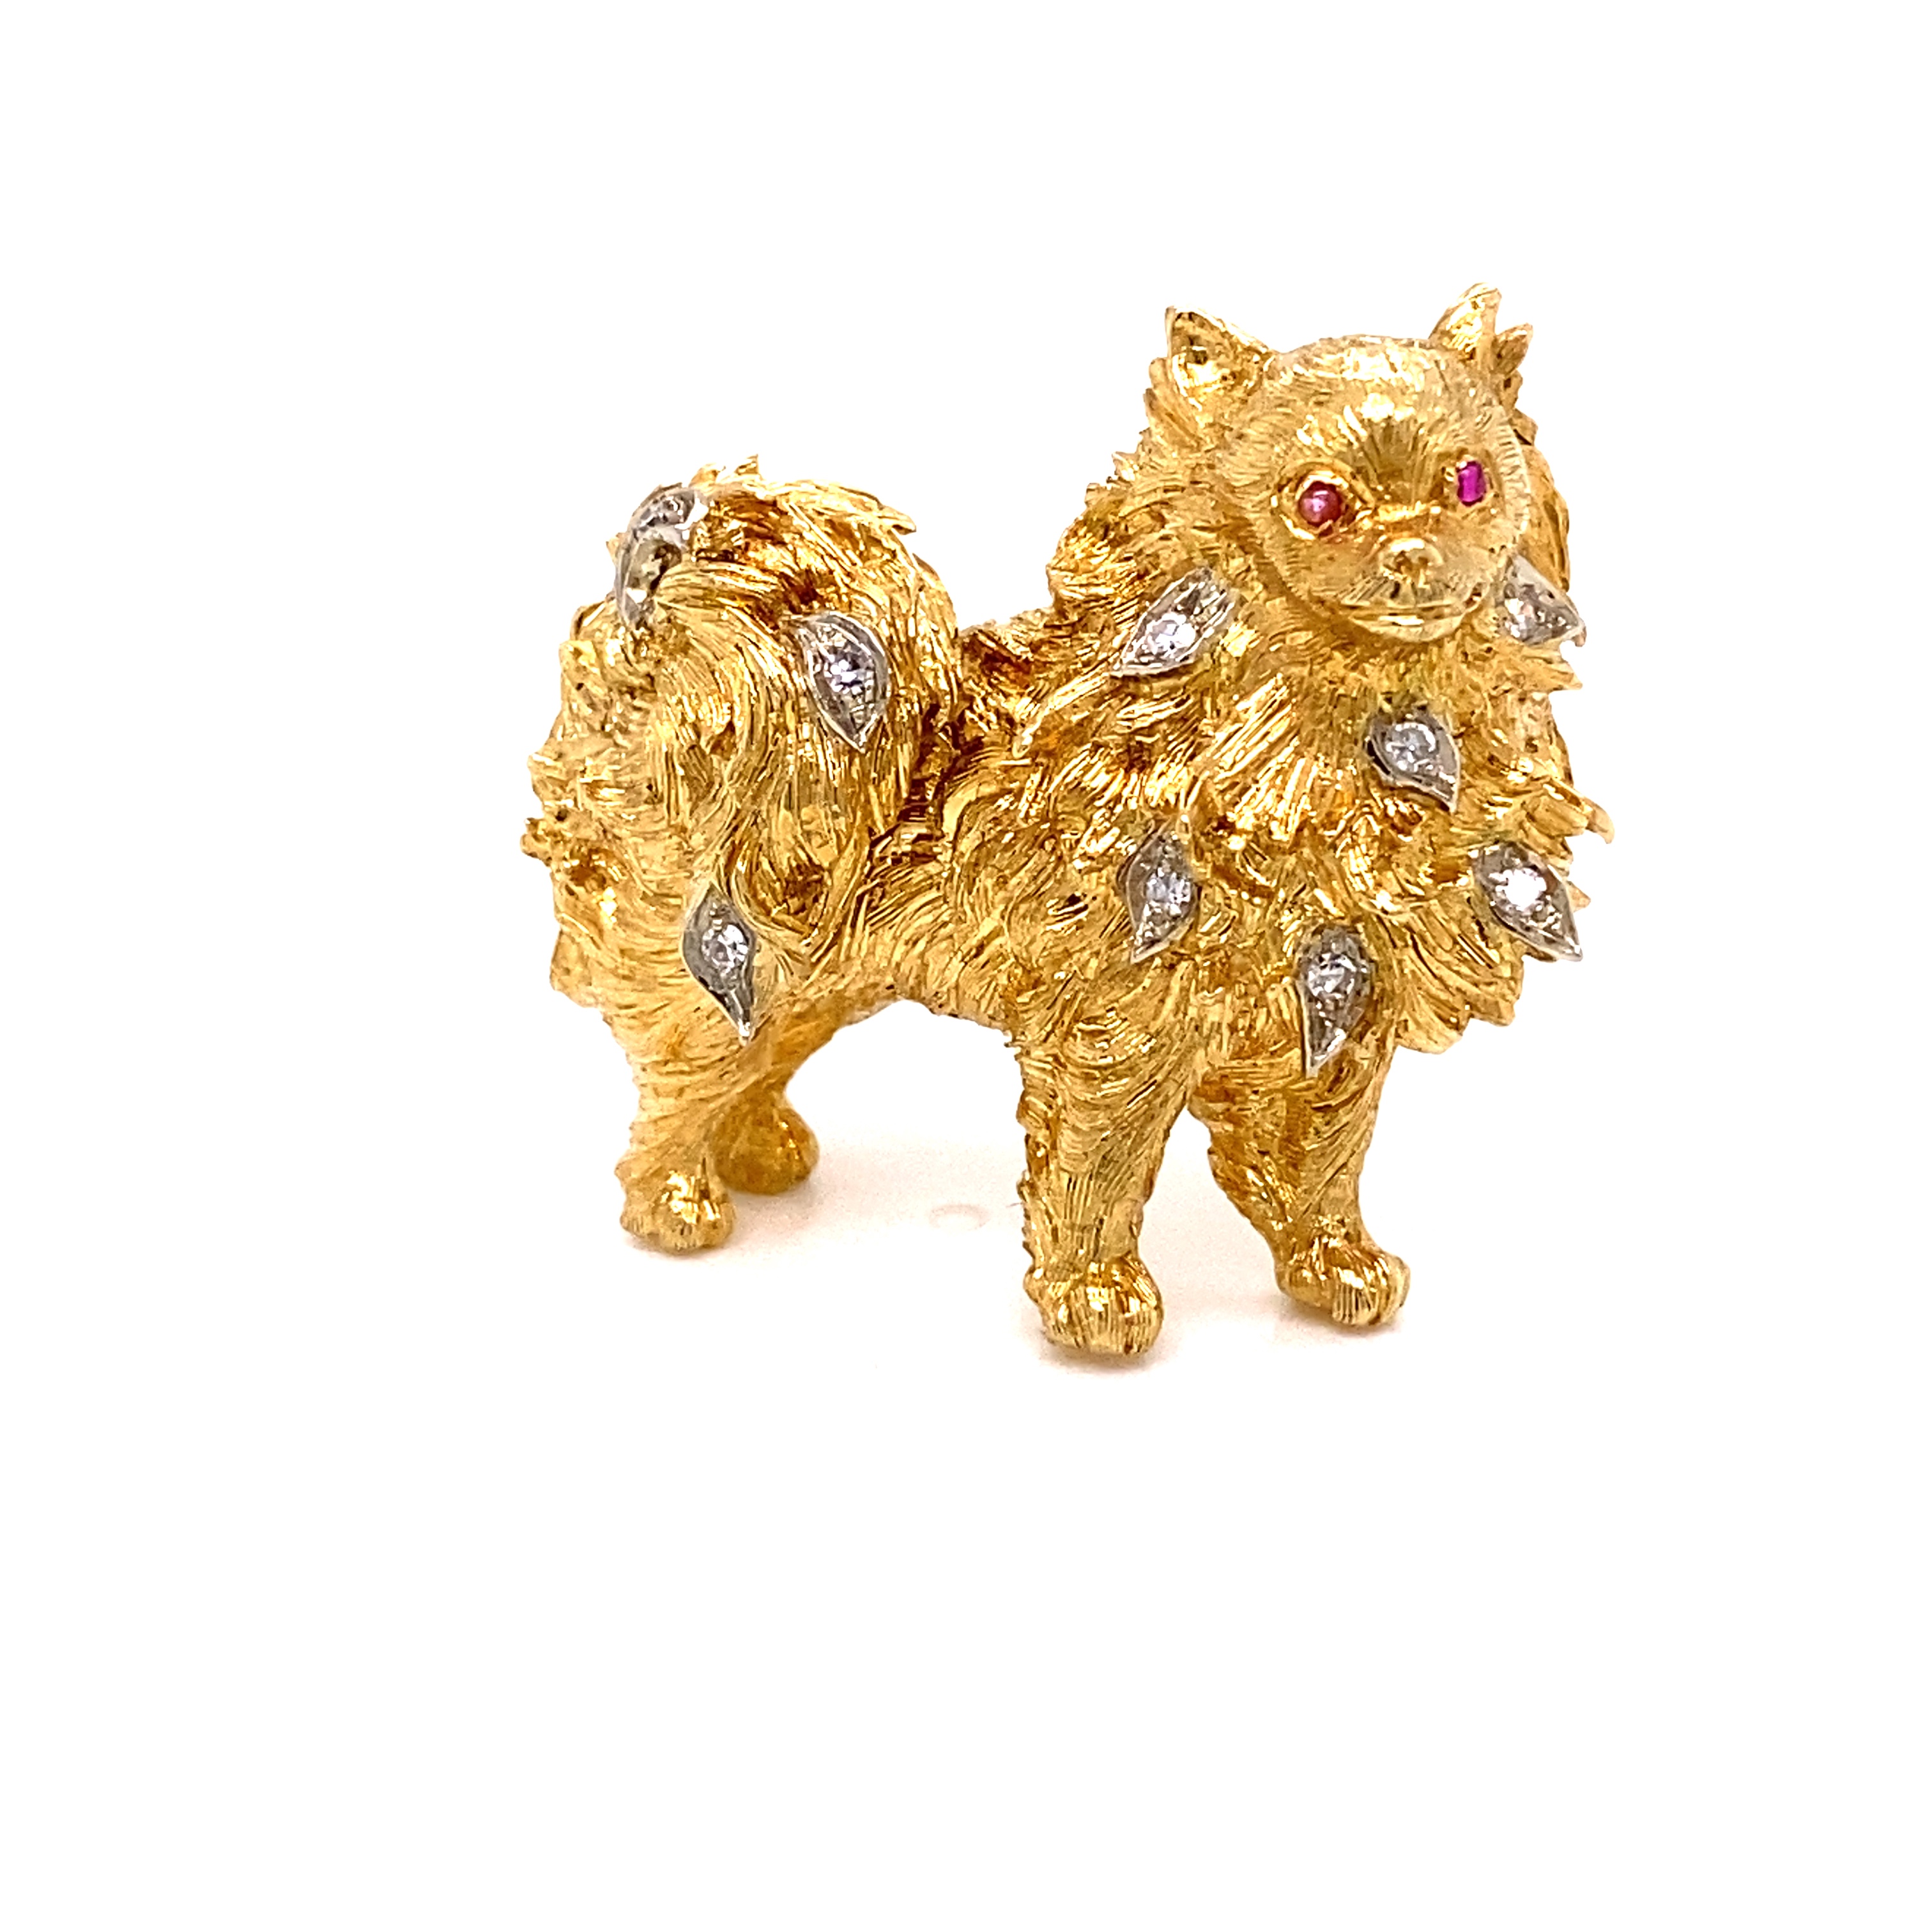 Gold Golden 18K 750 Pomeranian
dog with diamonds and rubies